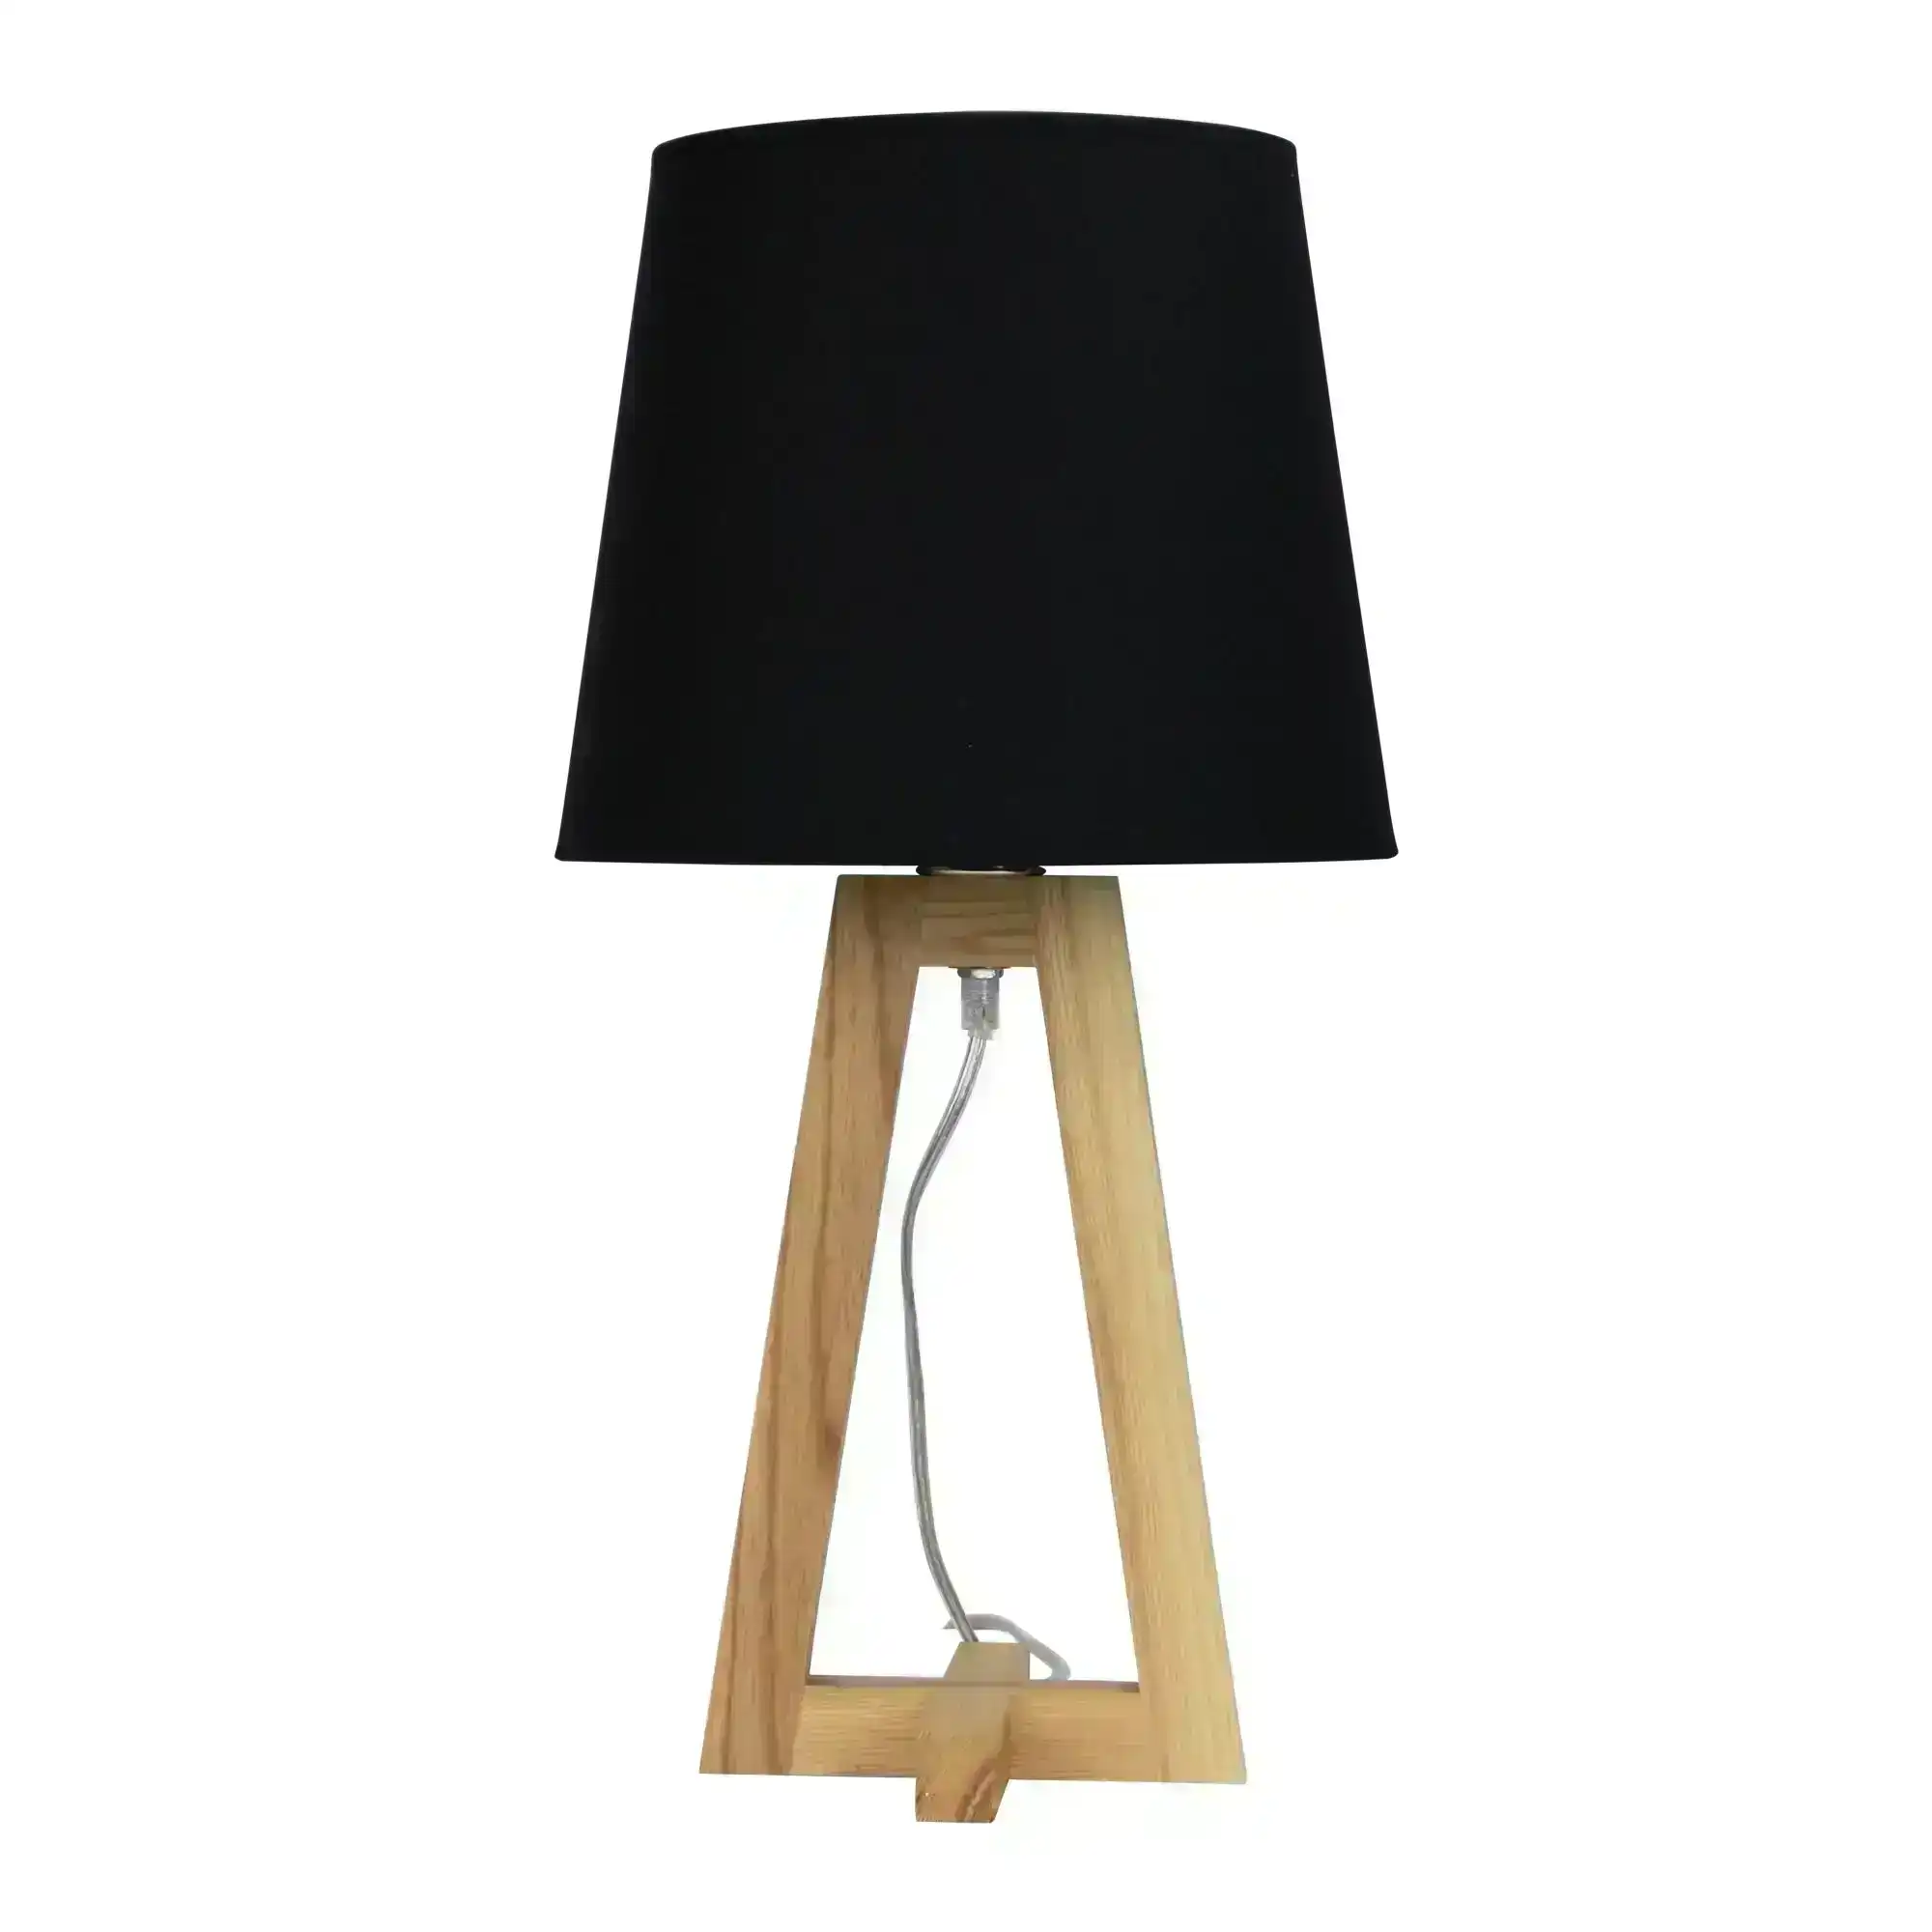 EDRA TABLE LAMP Black Scandi Table Lamp with Black Cotton Shade